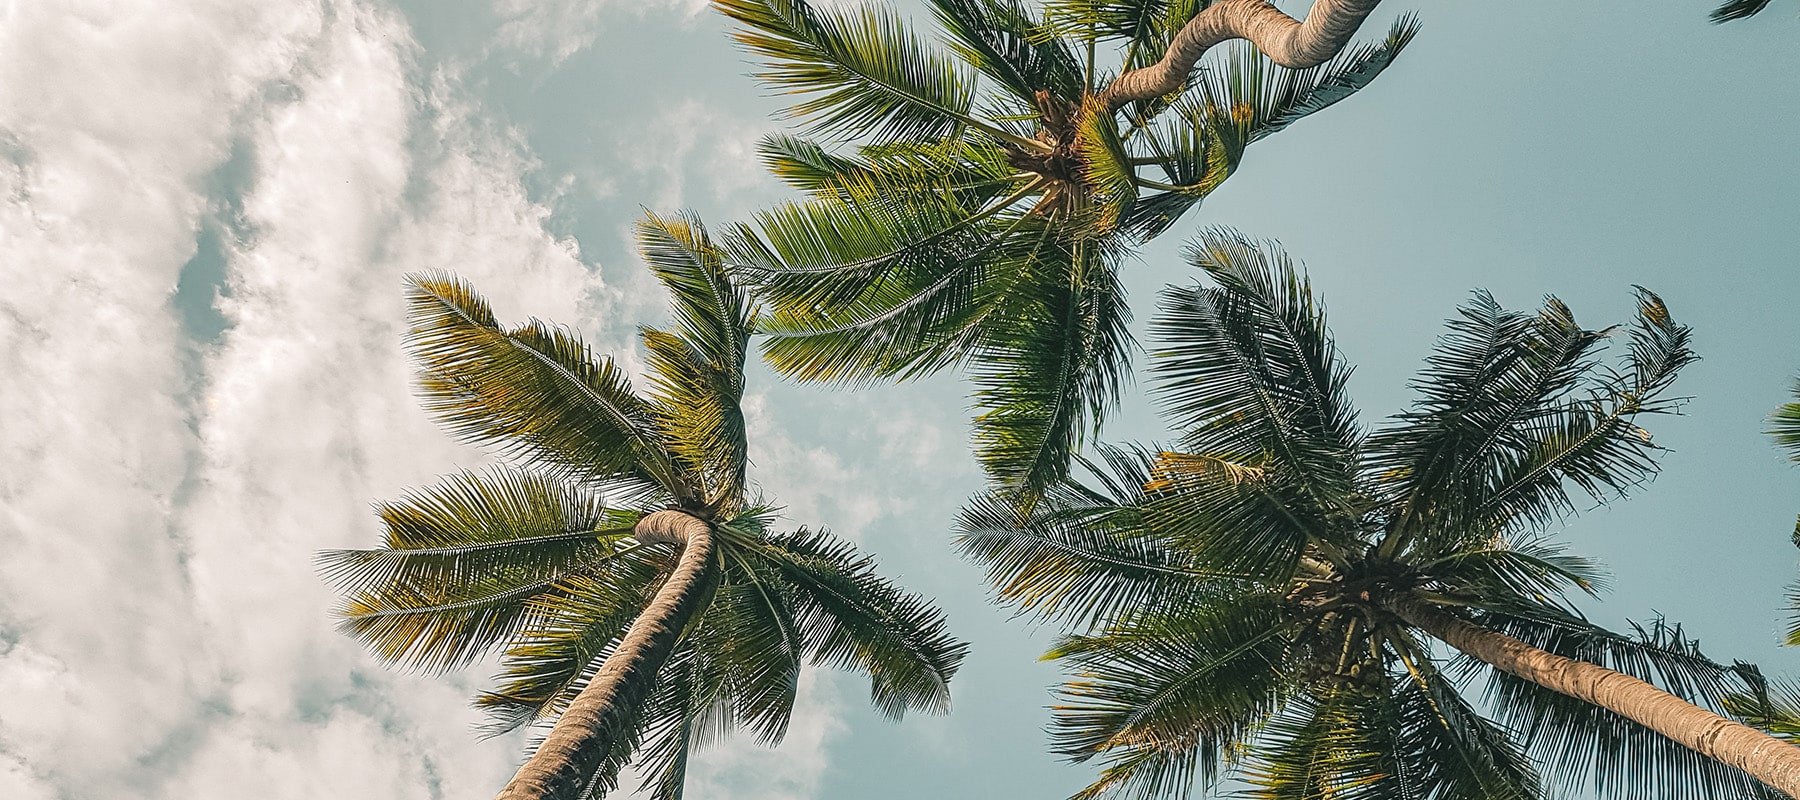 Travel diary Mombasa: Sky and palm trees